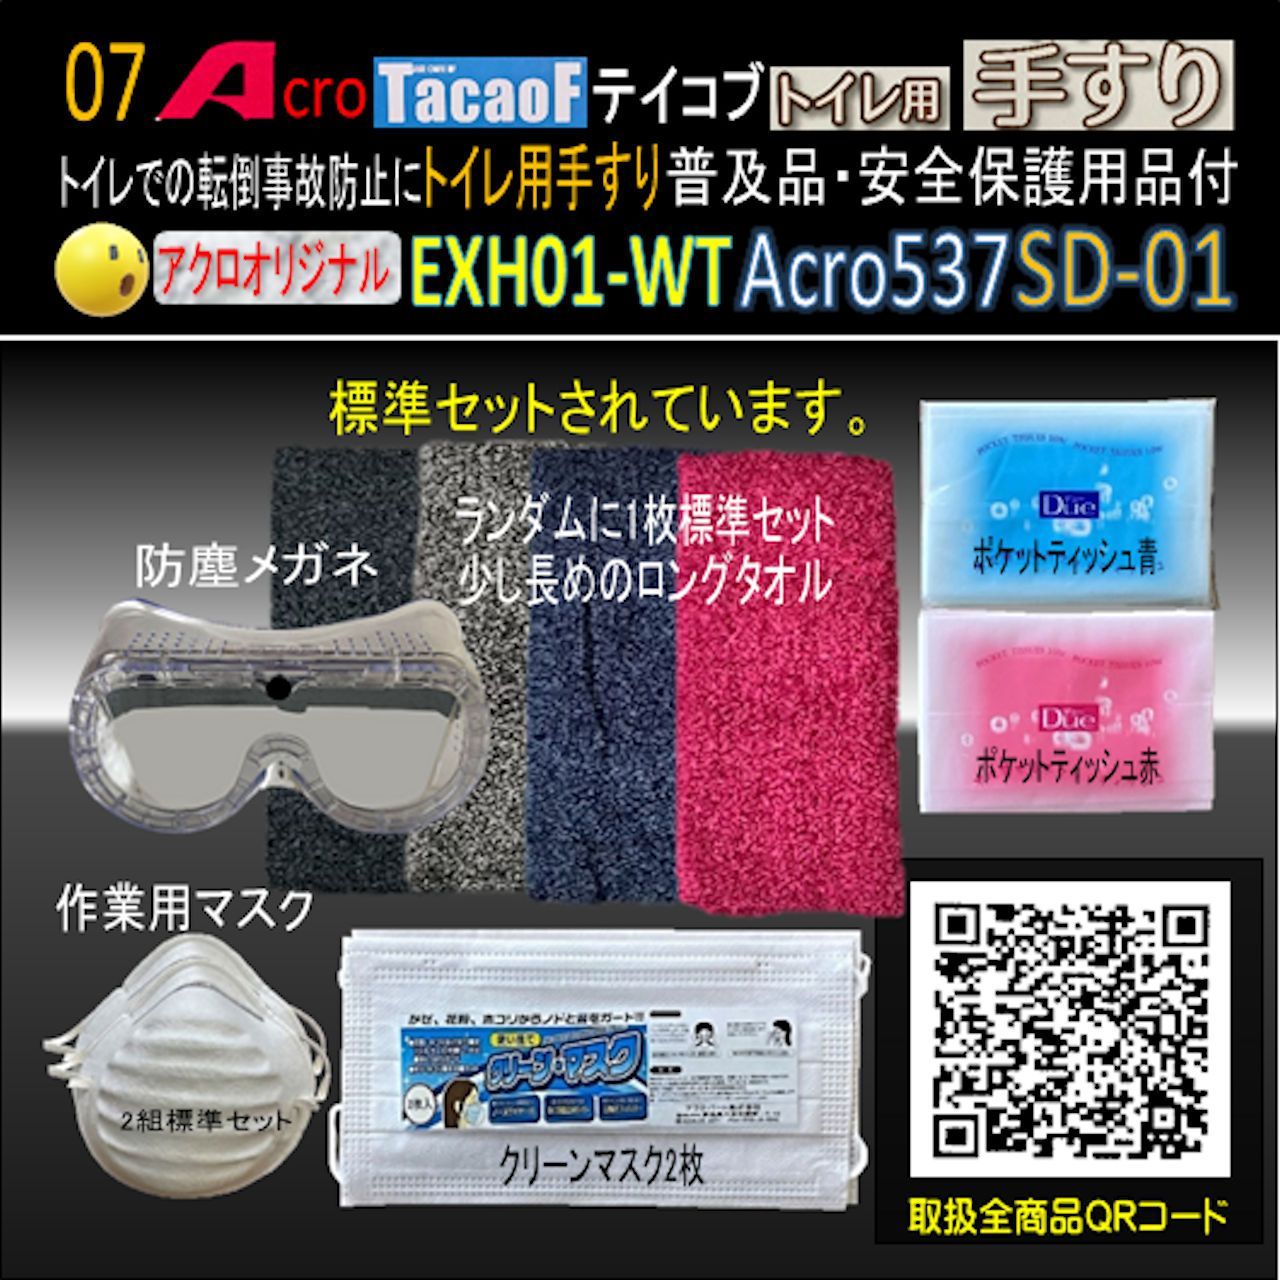 Acro537Tacaofポータブルトイレ用手すり・衛生安全保護用品付-SD01